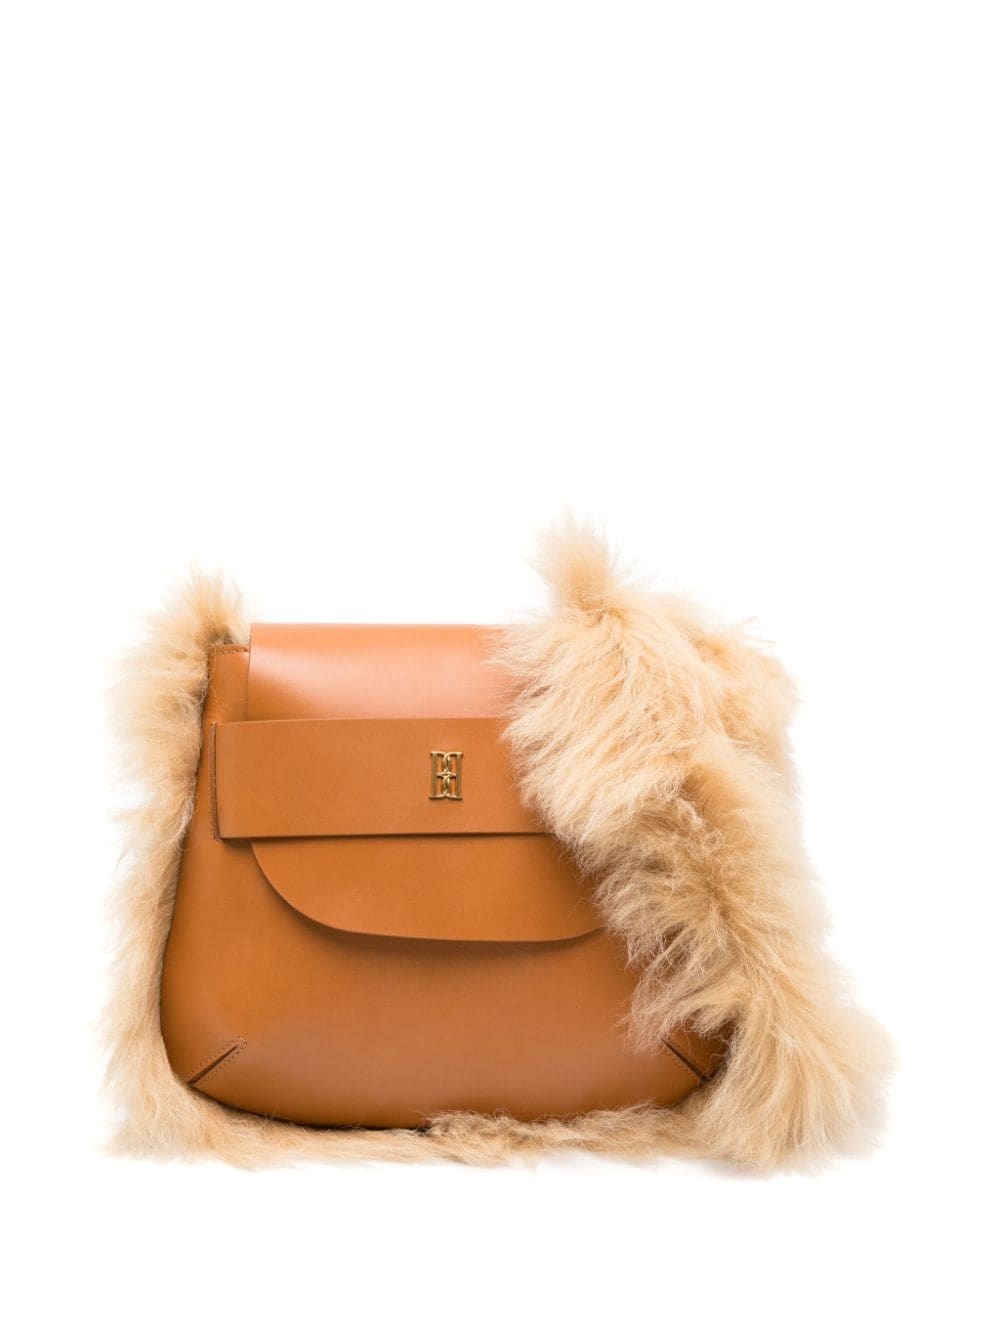 Etlon leather bag - 1